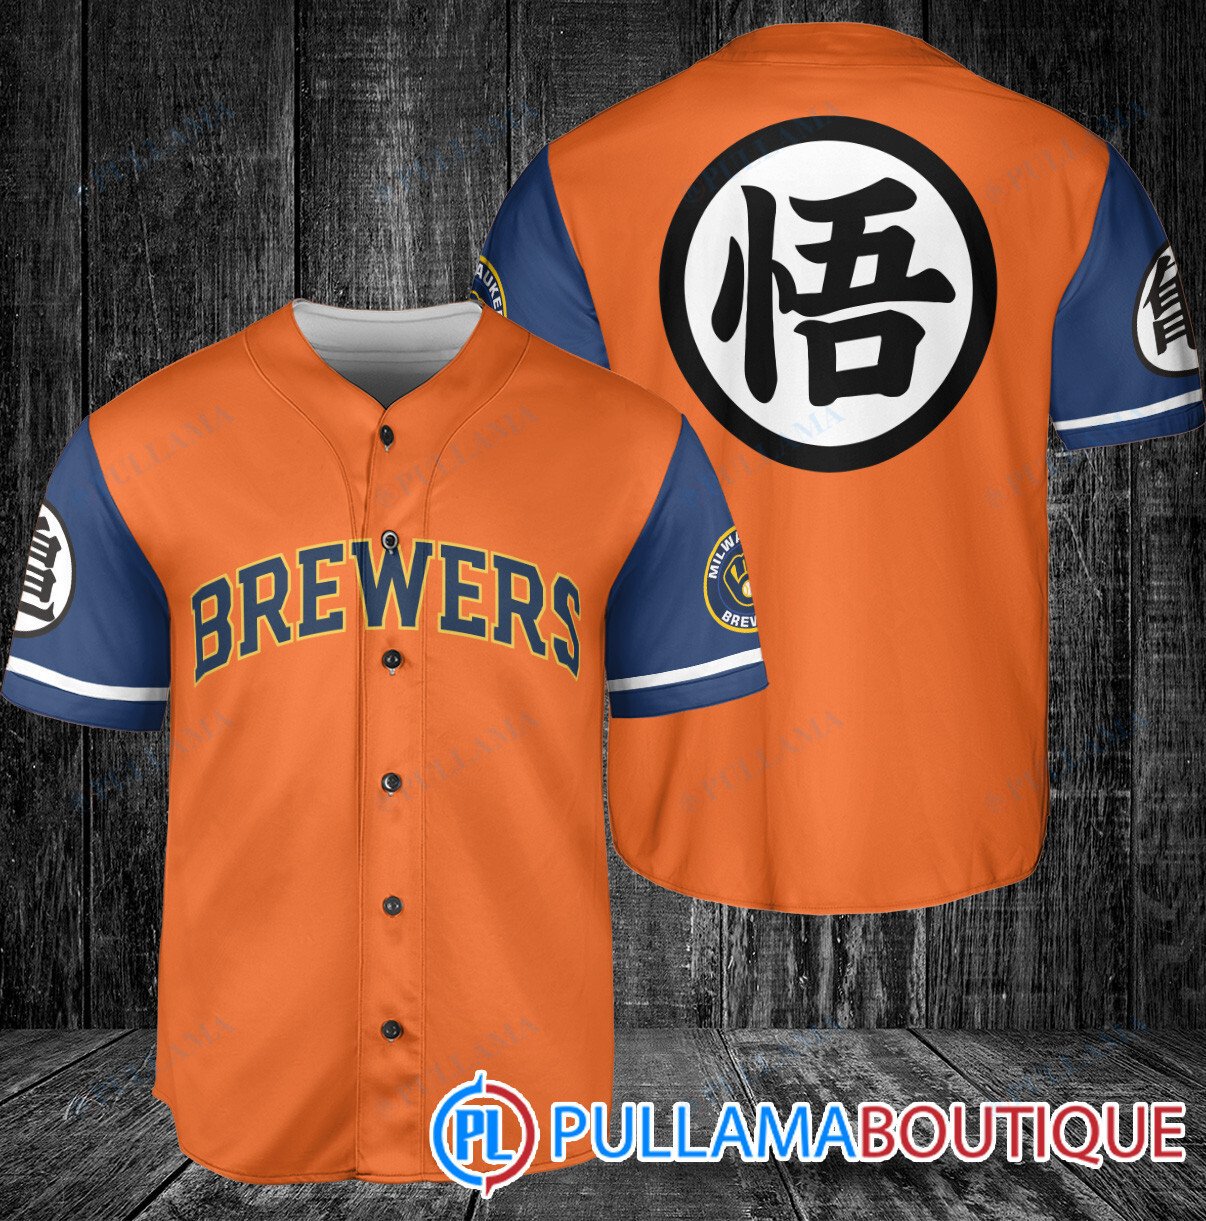 Dragon Ball Z Goku Baseball Jersey - Milwaukee Brewers - Pullama